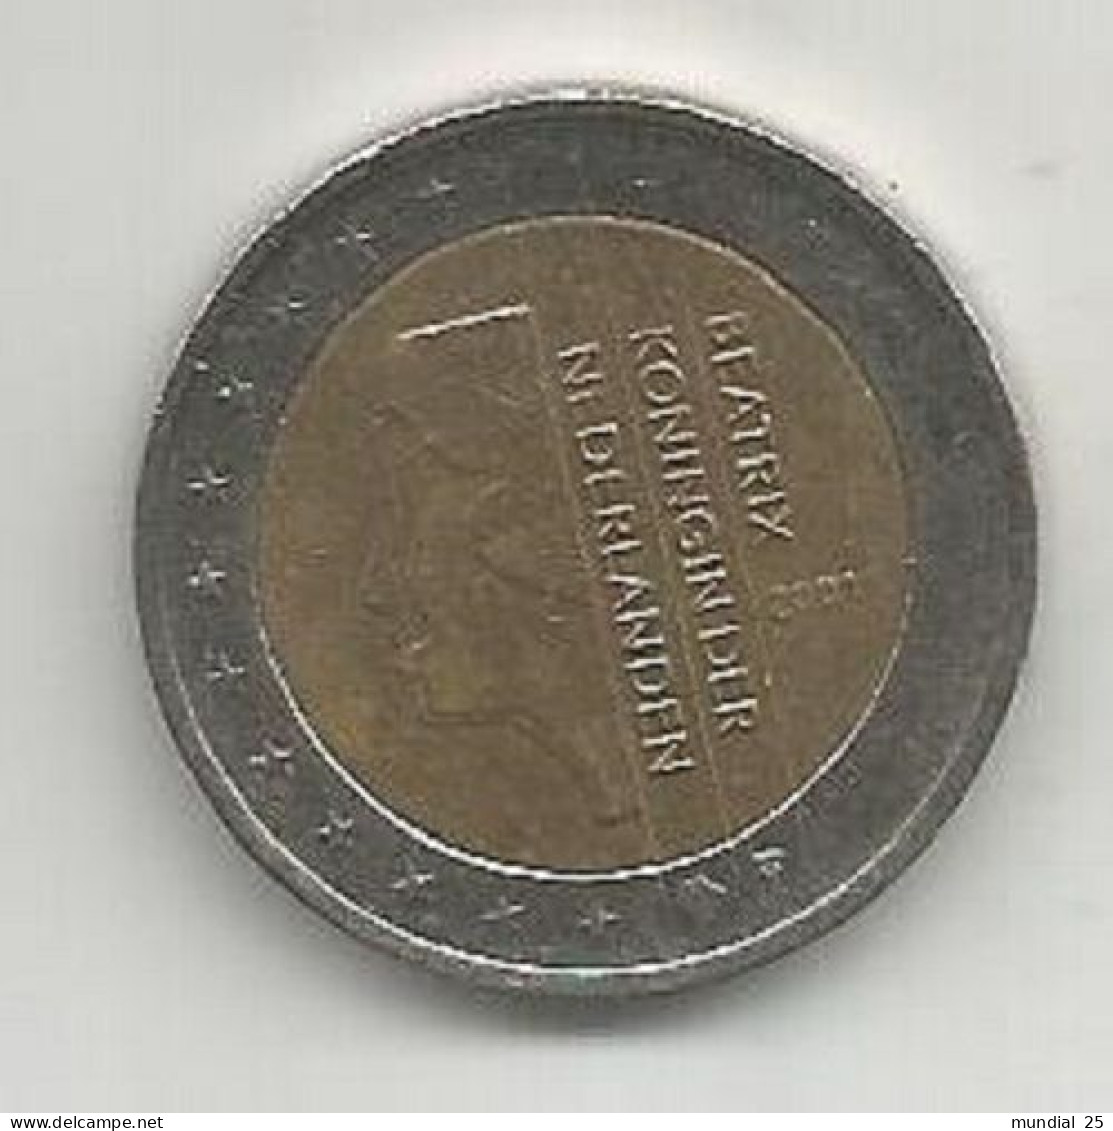 NETHERLANDS 2 EURO 2001 - Paesi Bassi